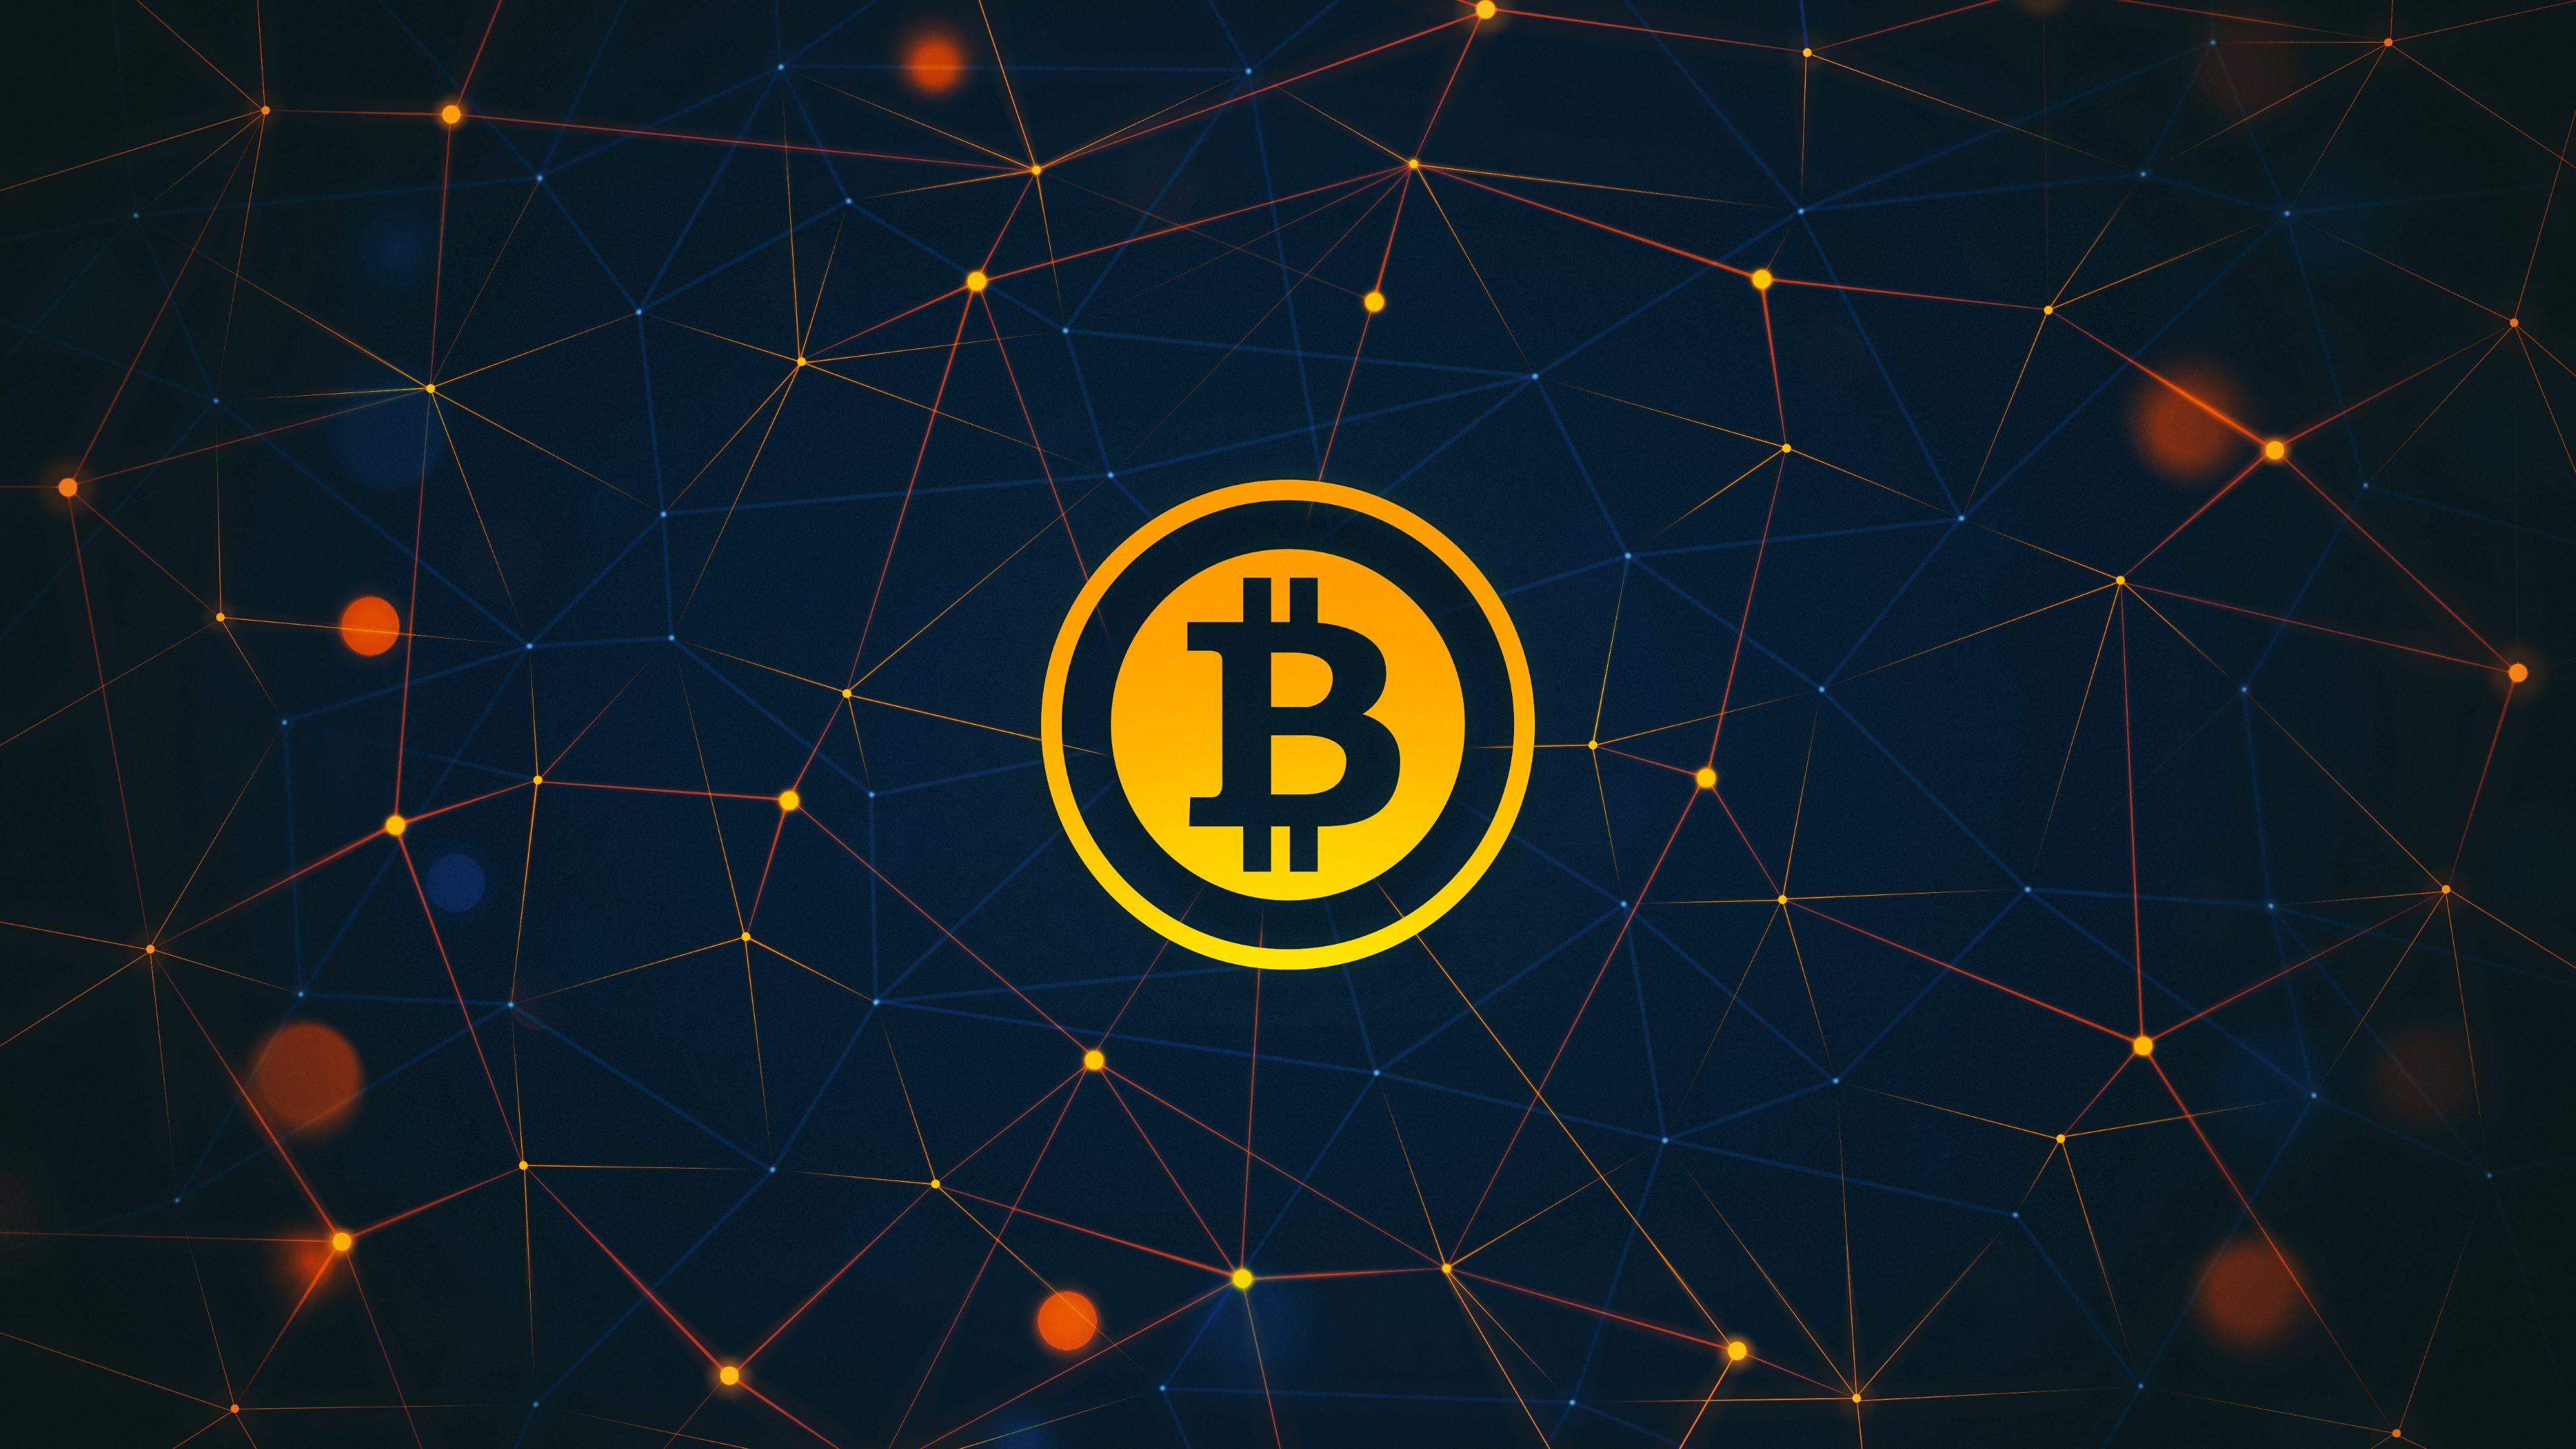 Bitcoin image HD / Predict bitcoin price machine learning